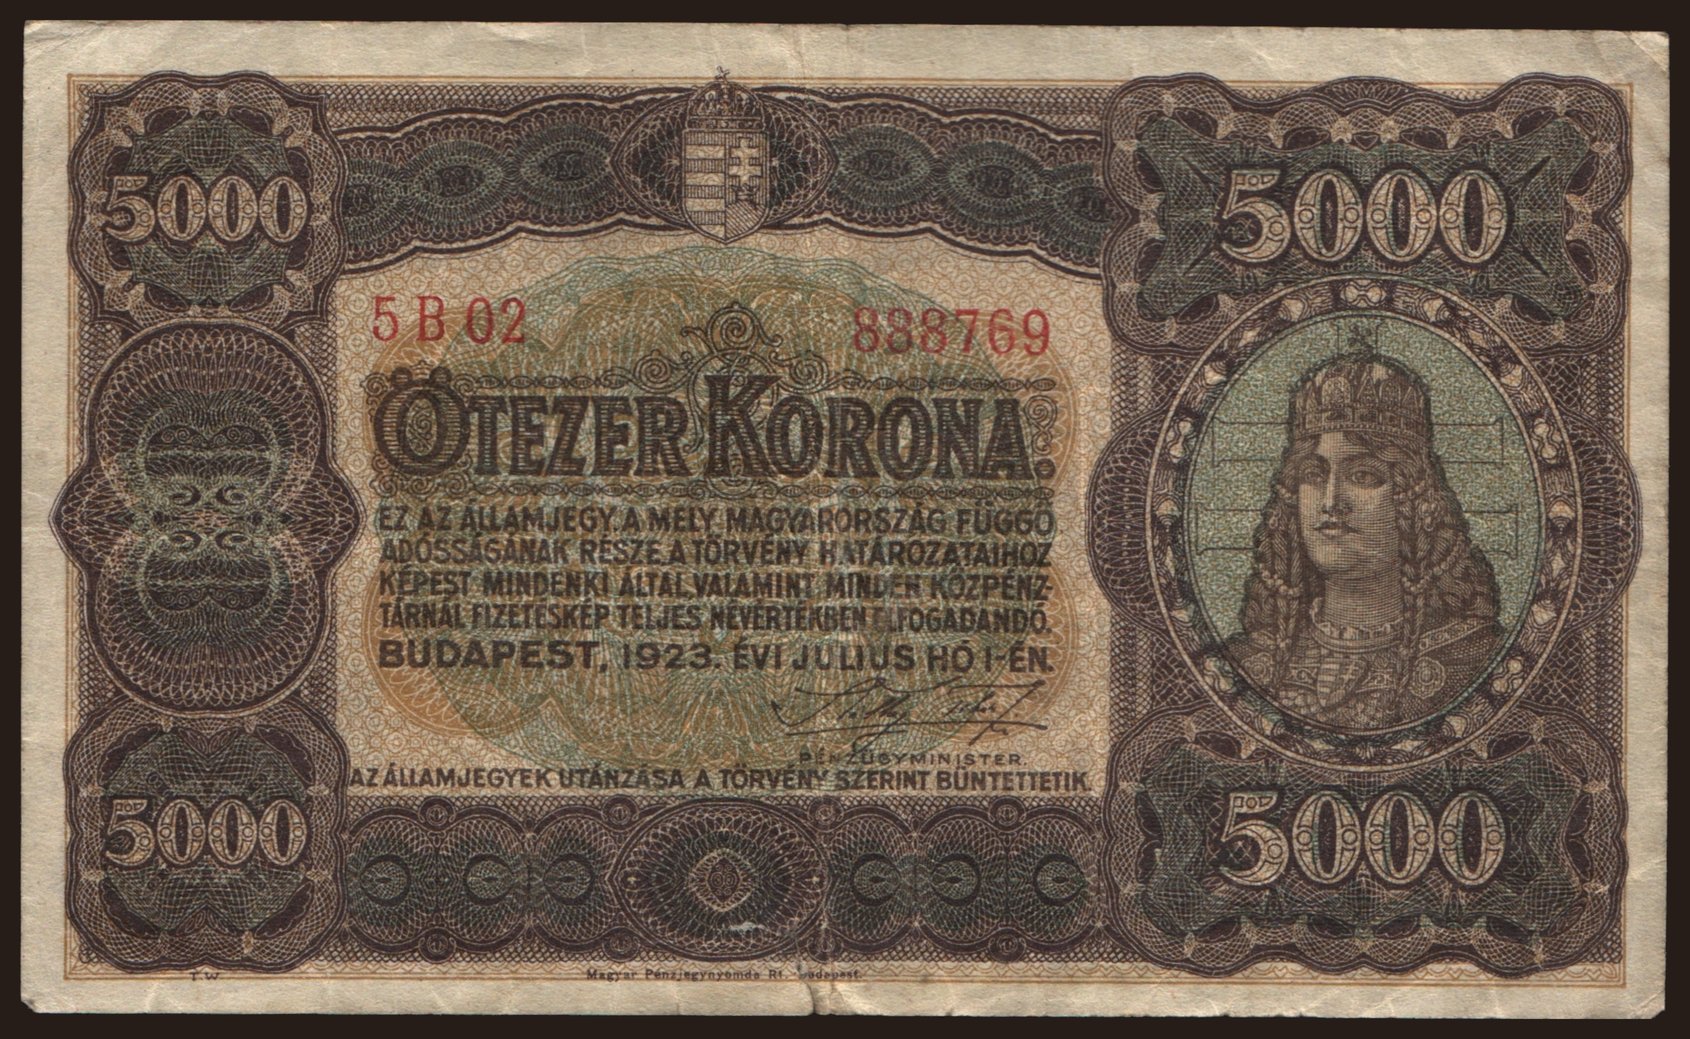 5000 korona, 1923